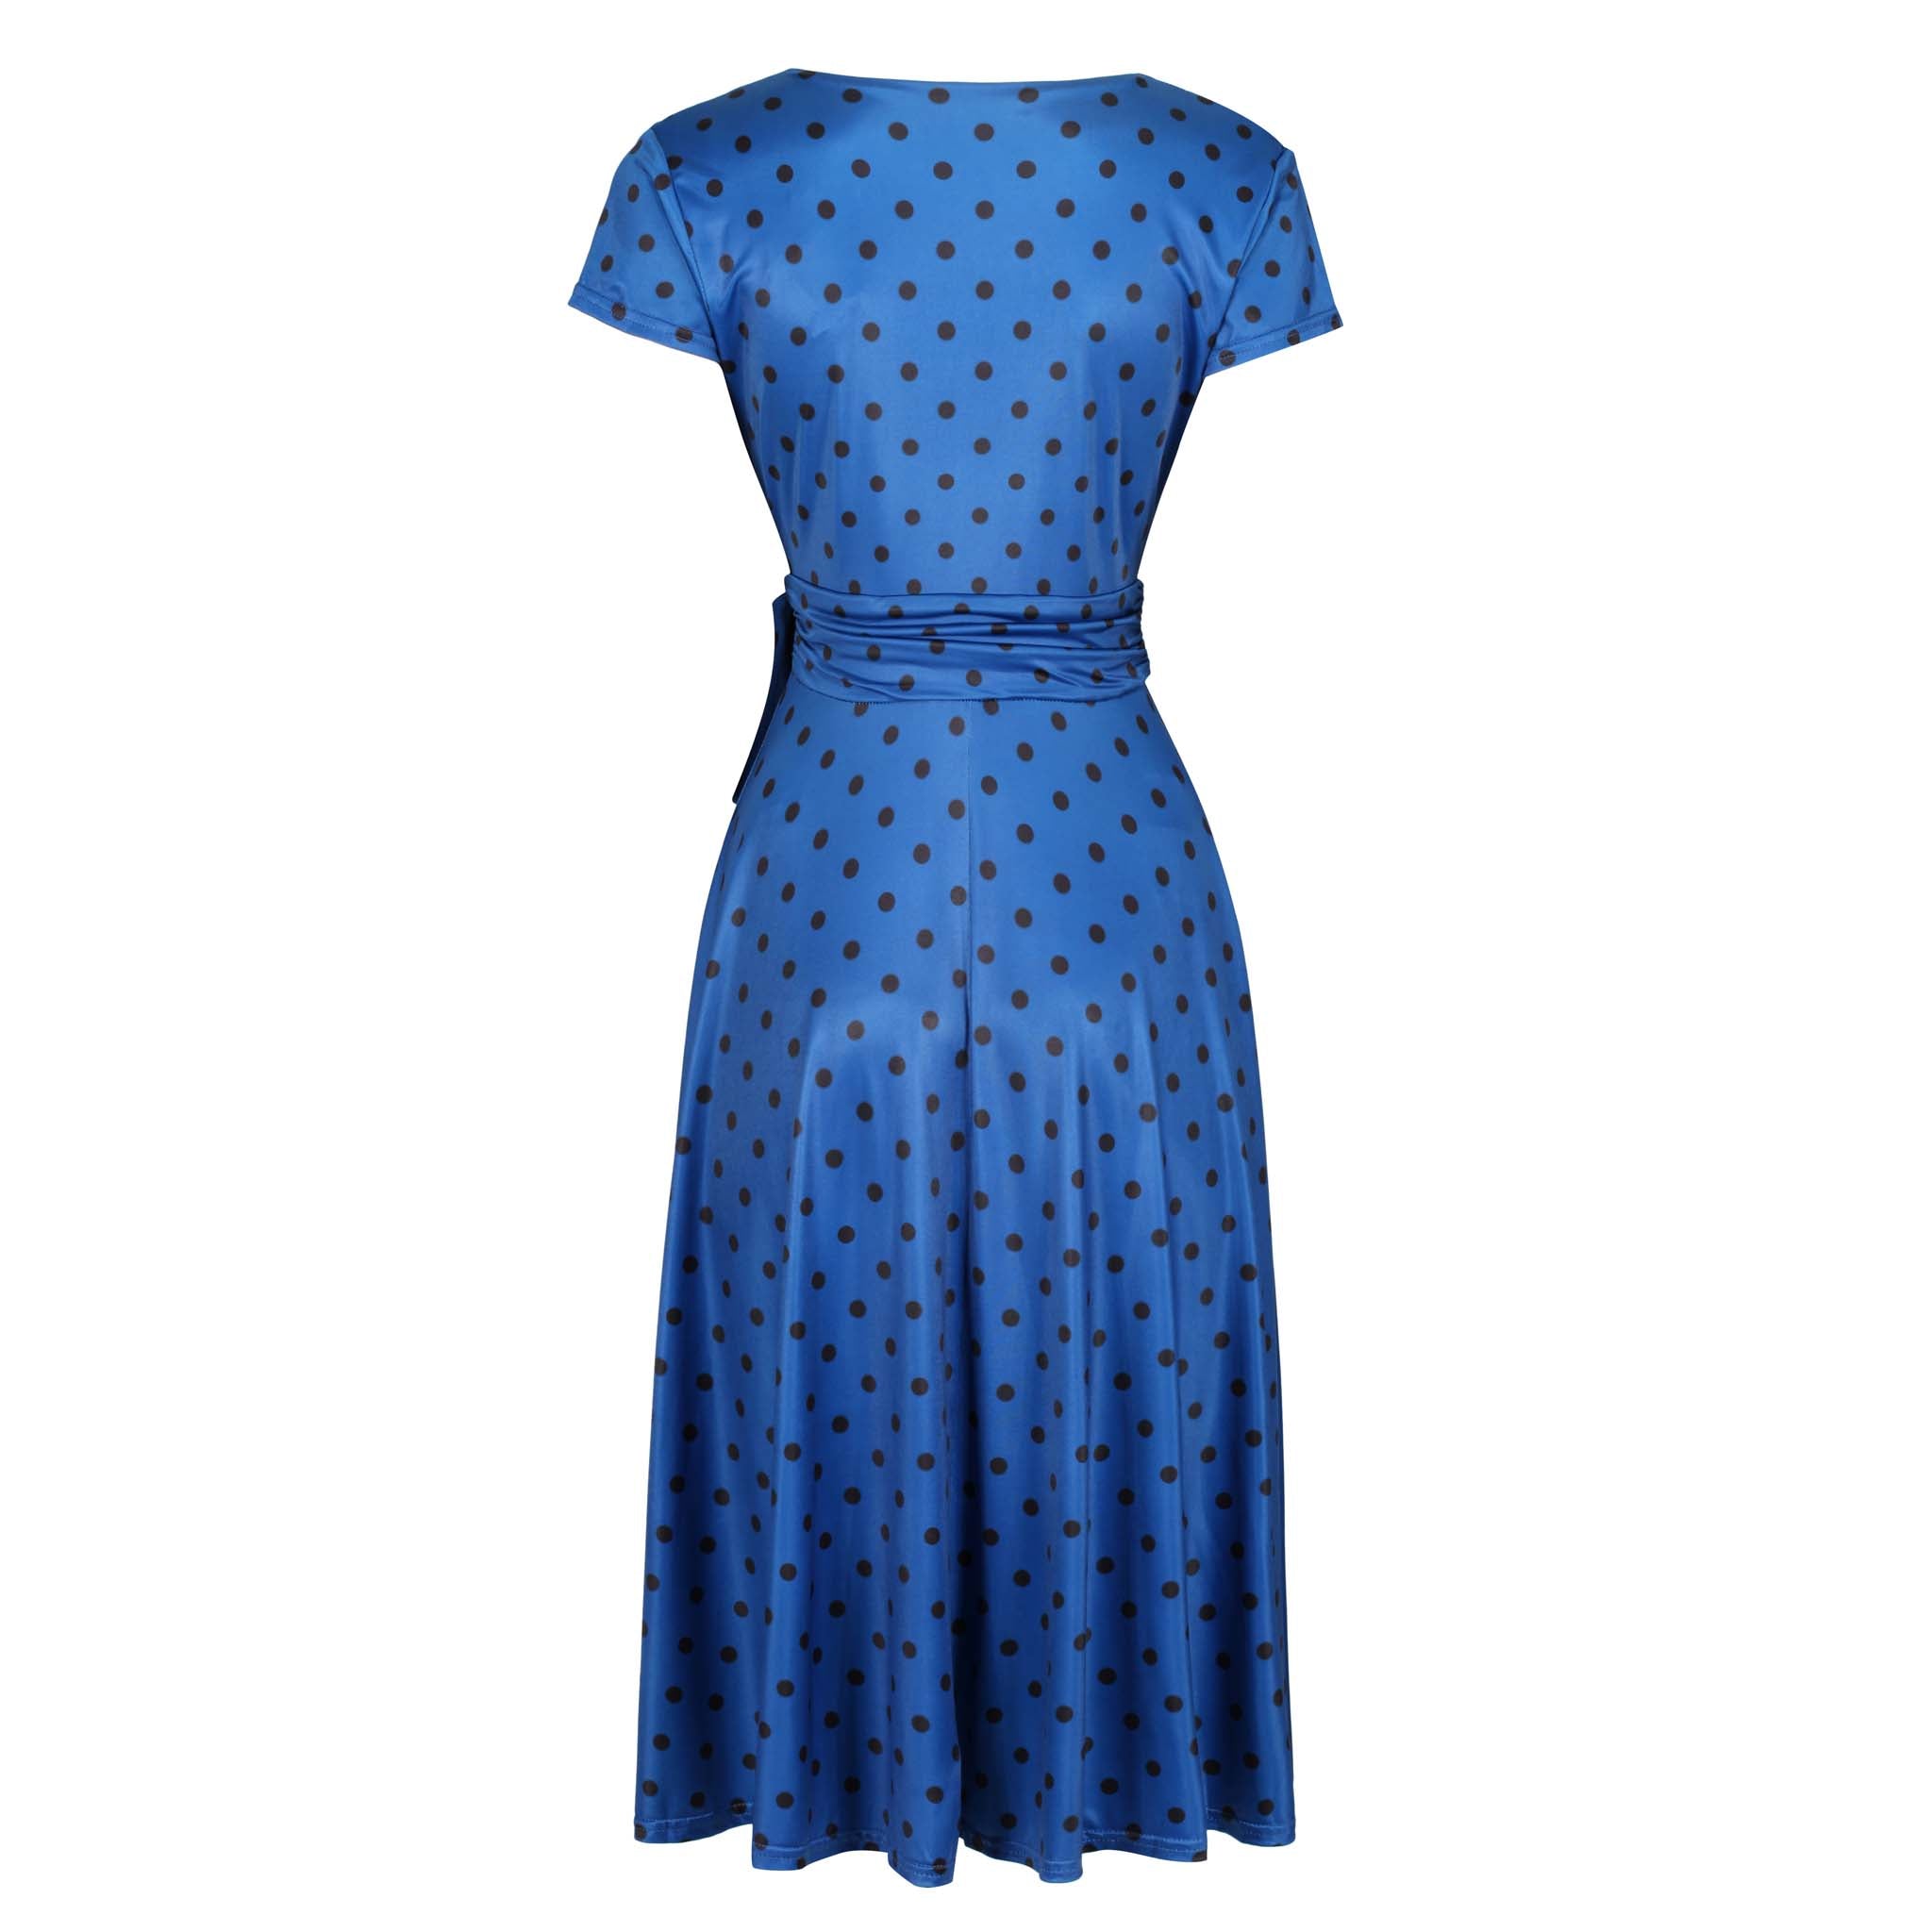 Classic Royal Blue Polka Dot Cap Sleeve Fit And Flare Midi Dress ...